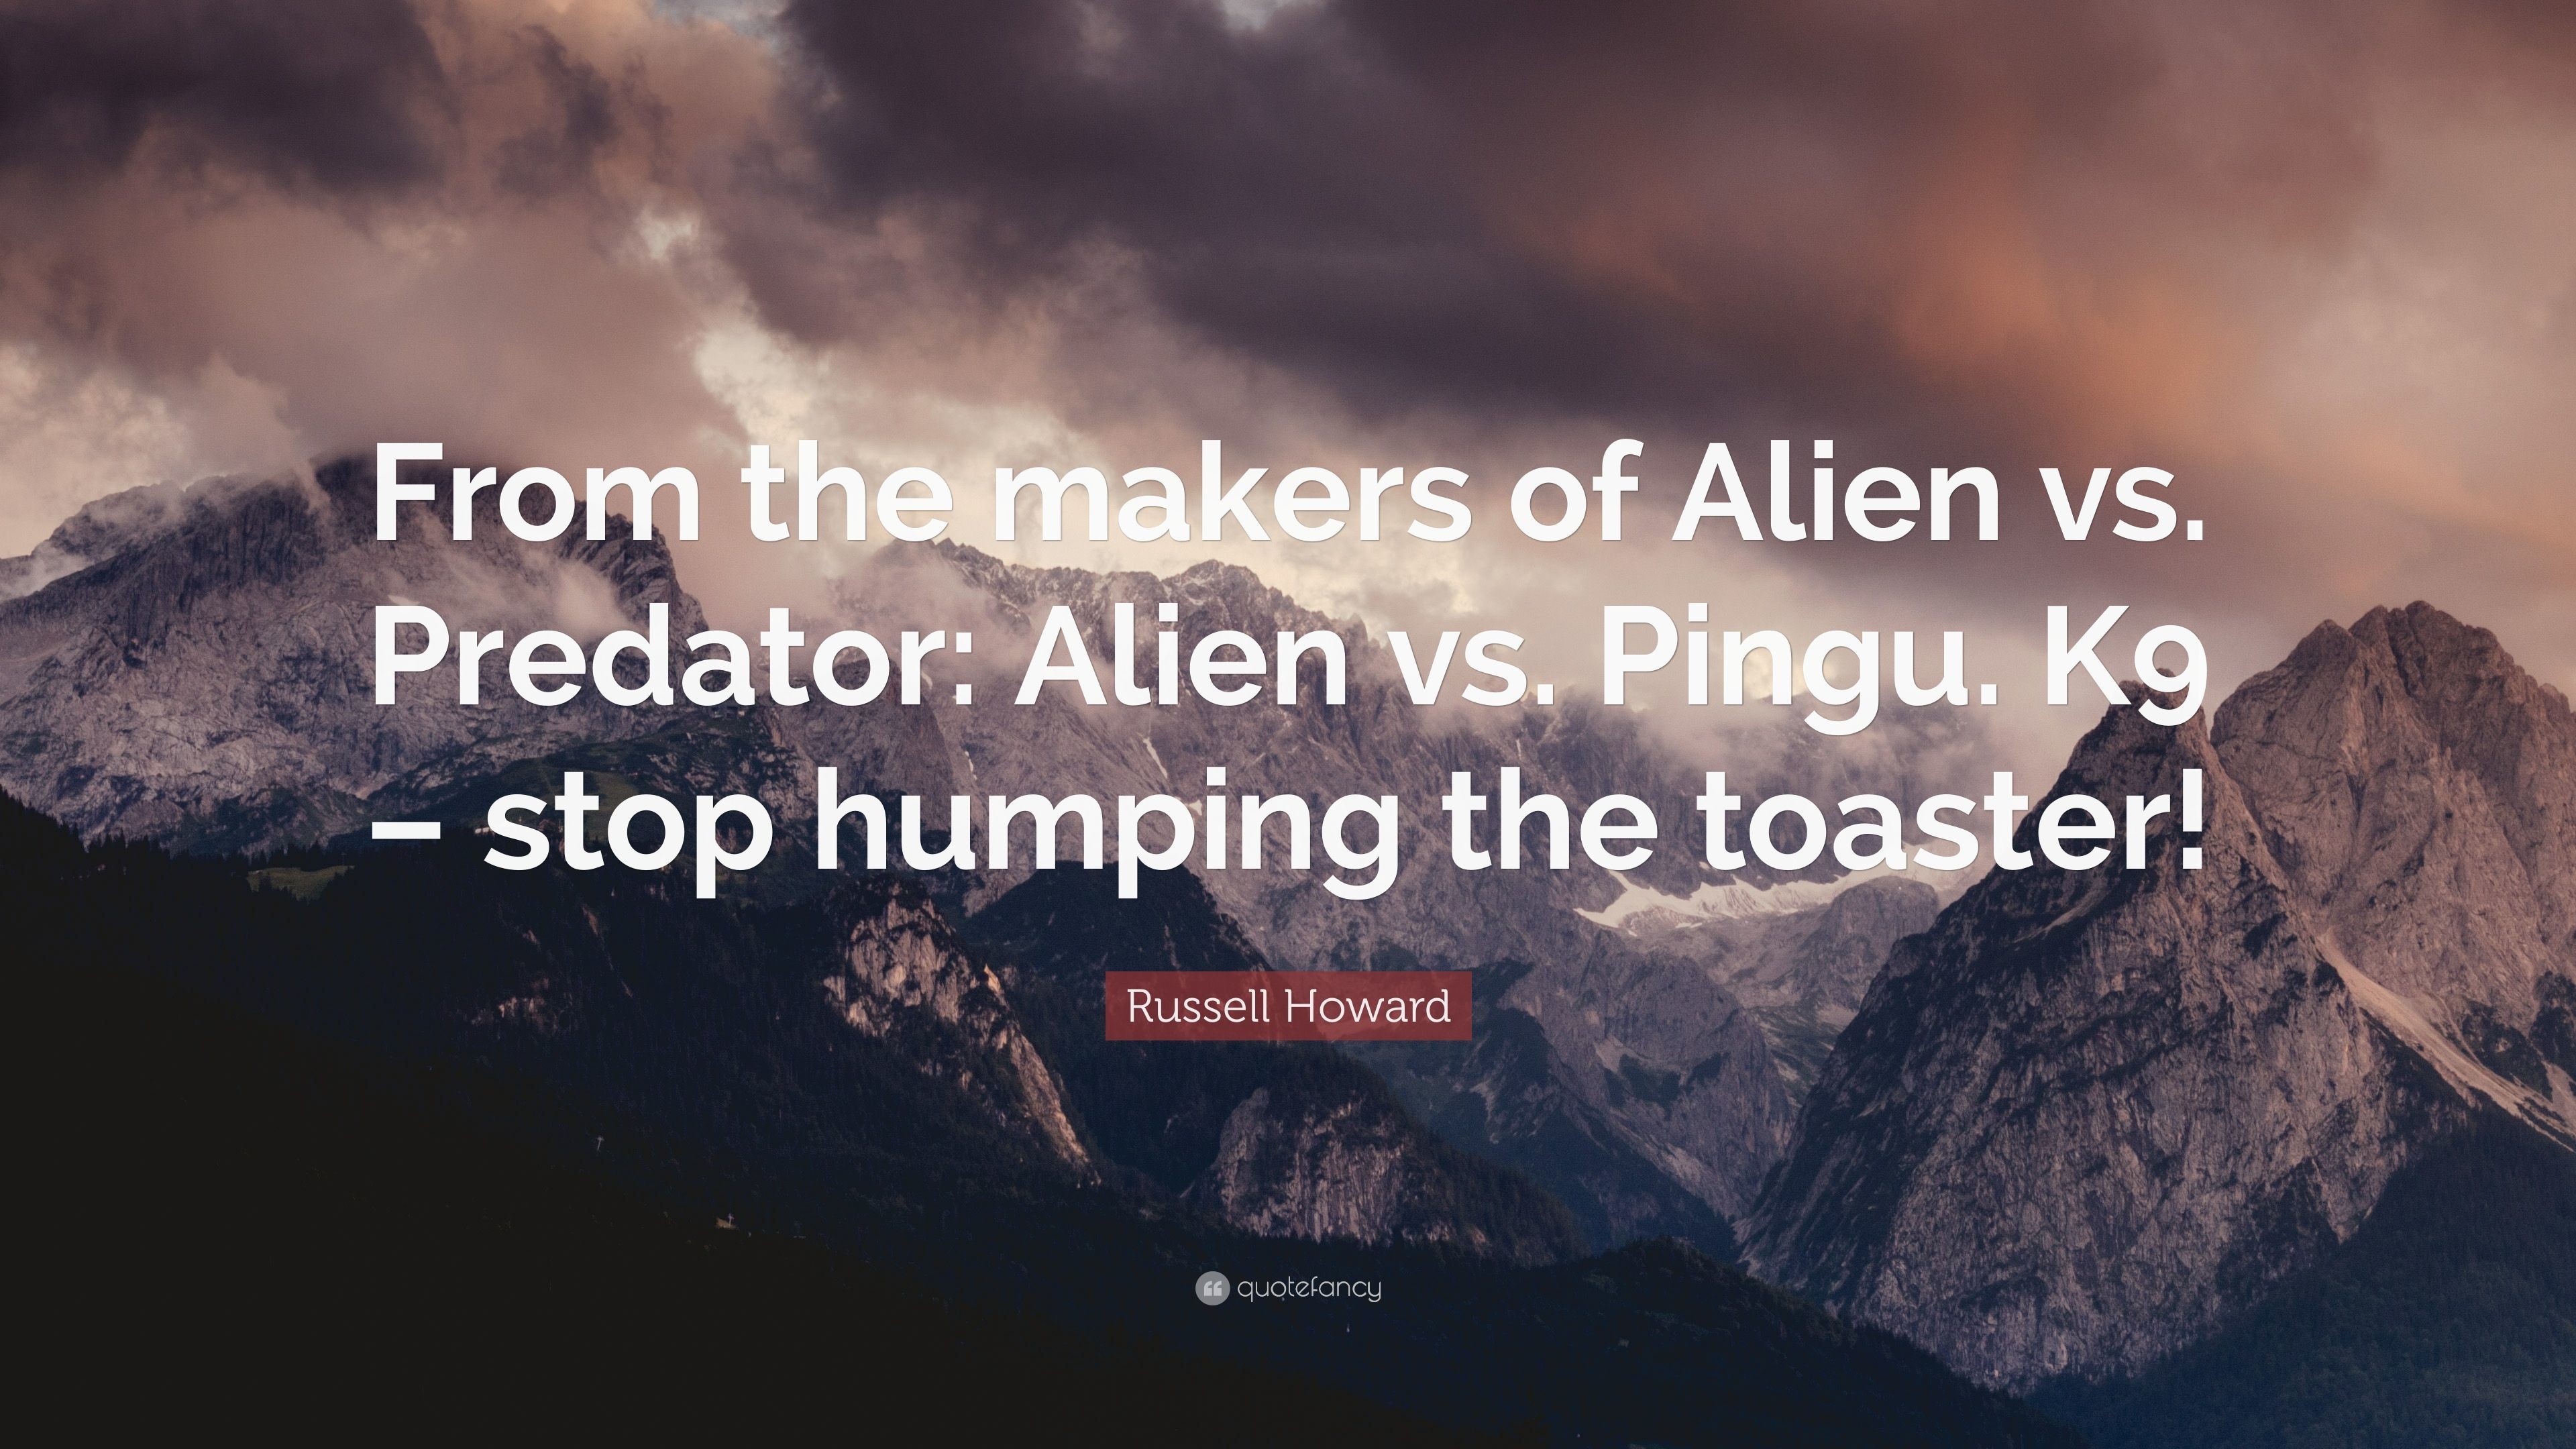 3840x2160 Russell Howard Quote: “From the makers of Alien vs. Predator: Alien vs